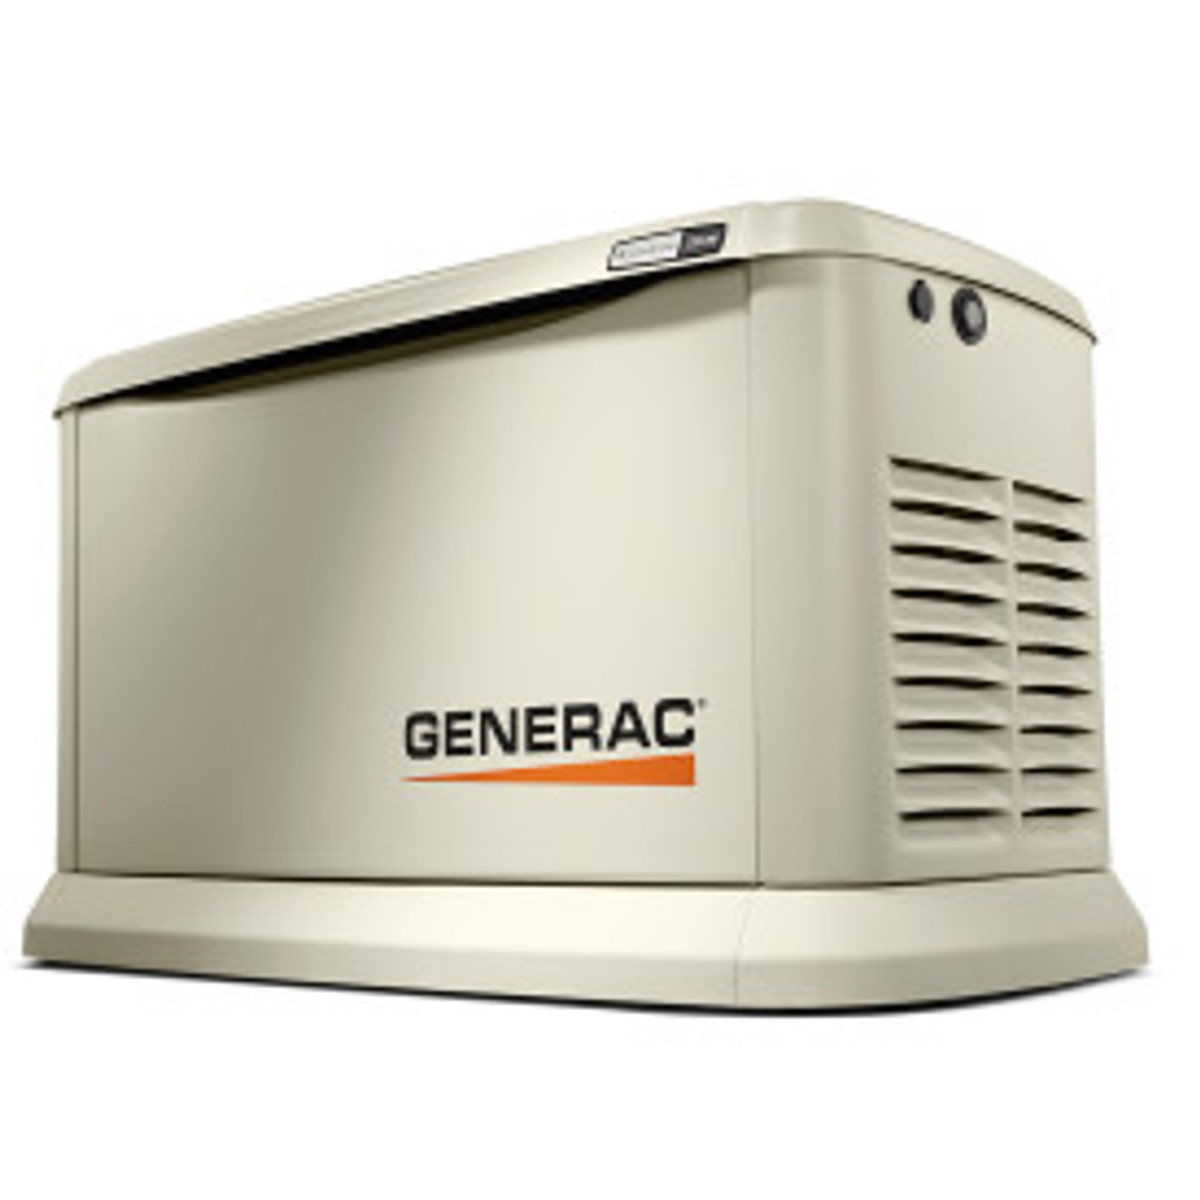 Generac 7077 Wi-Fi Guardian Series 20kW Standby Generator 3ph 208V